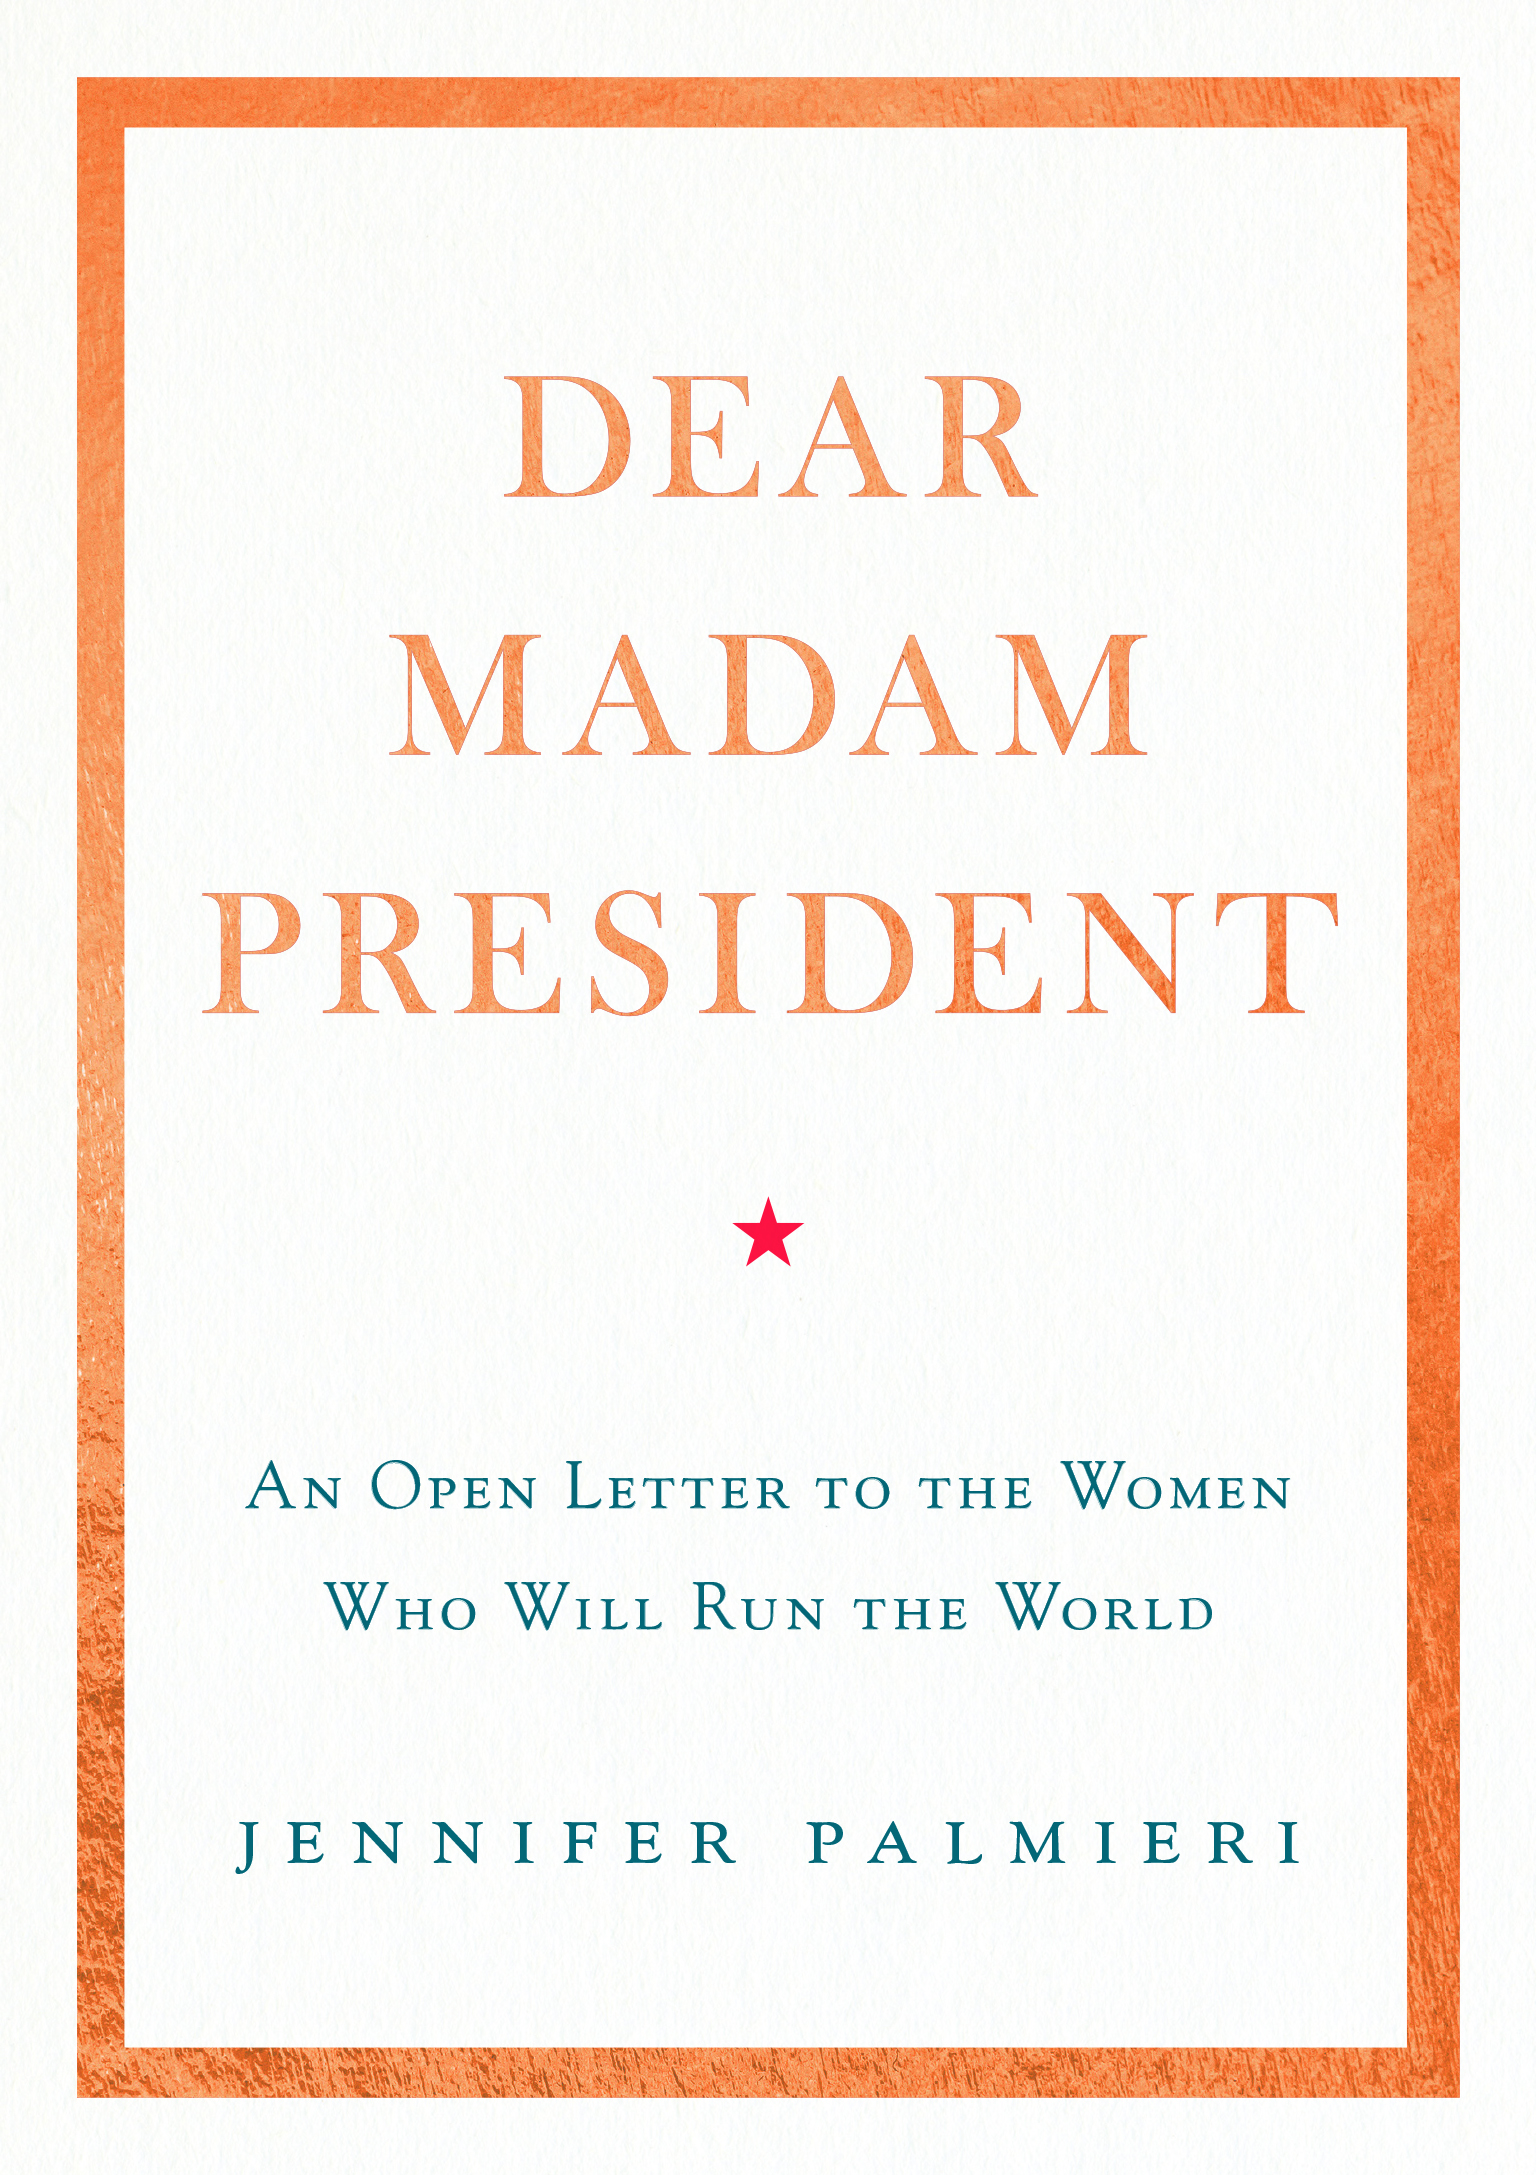 Jennifer Palmieri's Dear Madam President